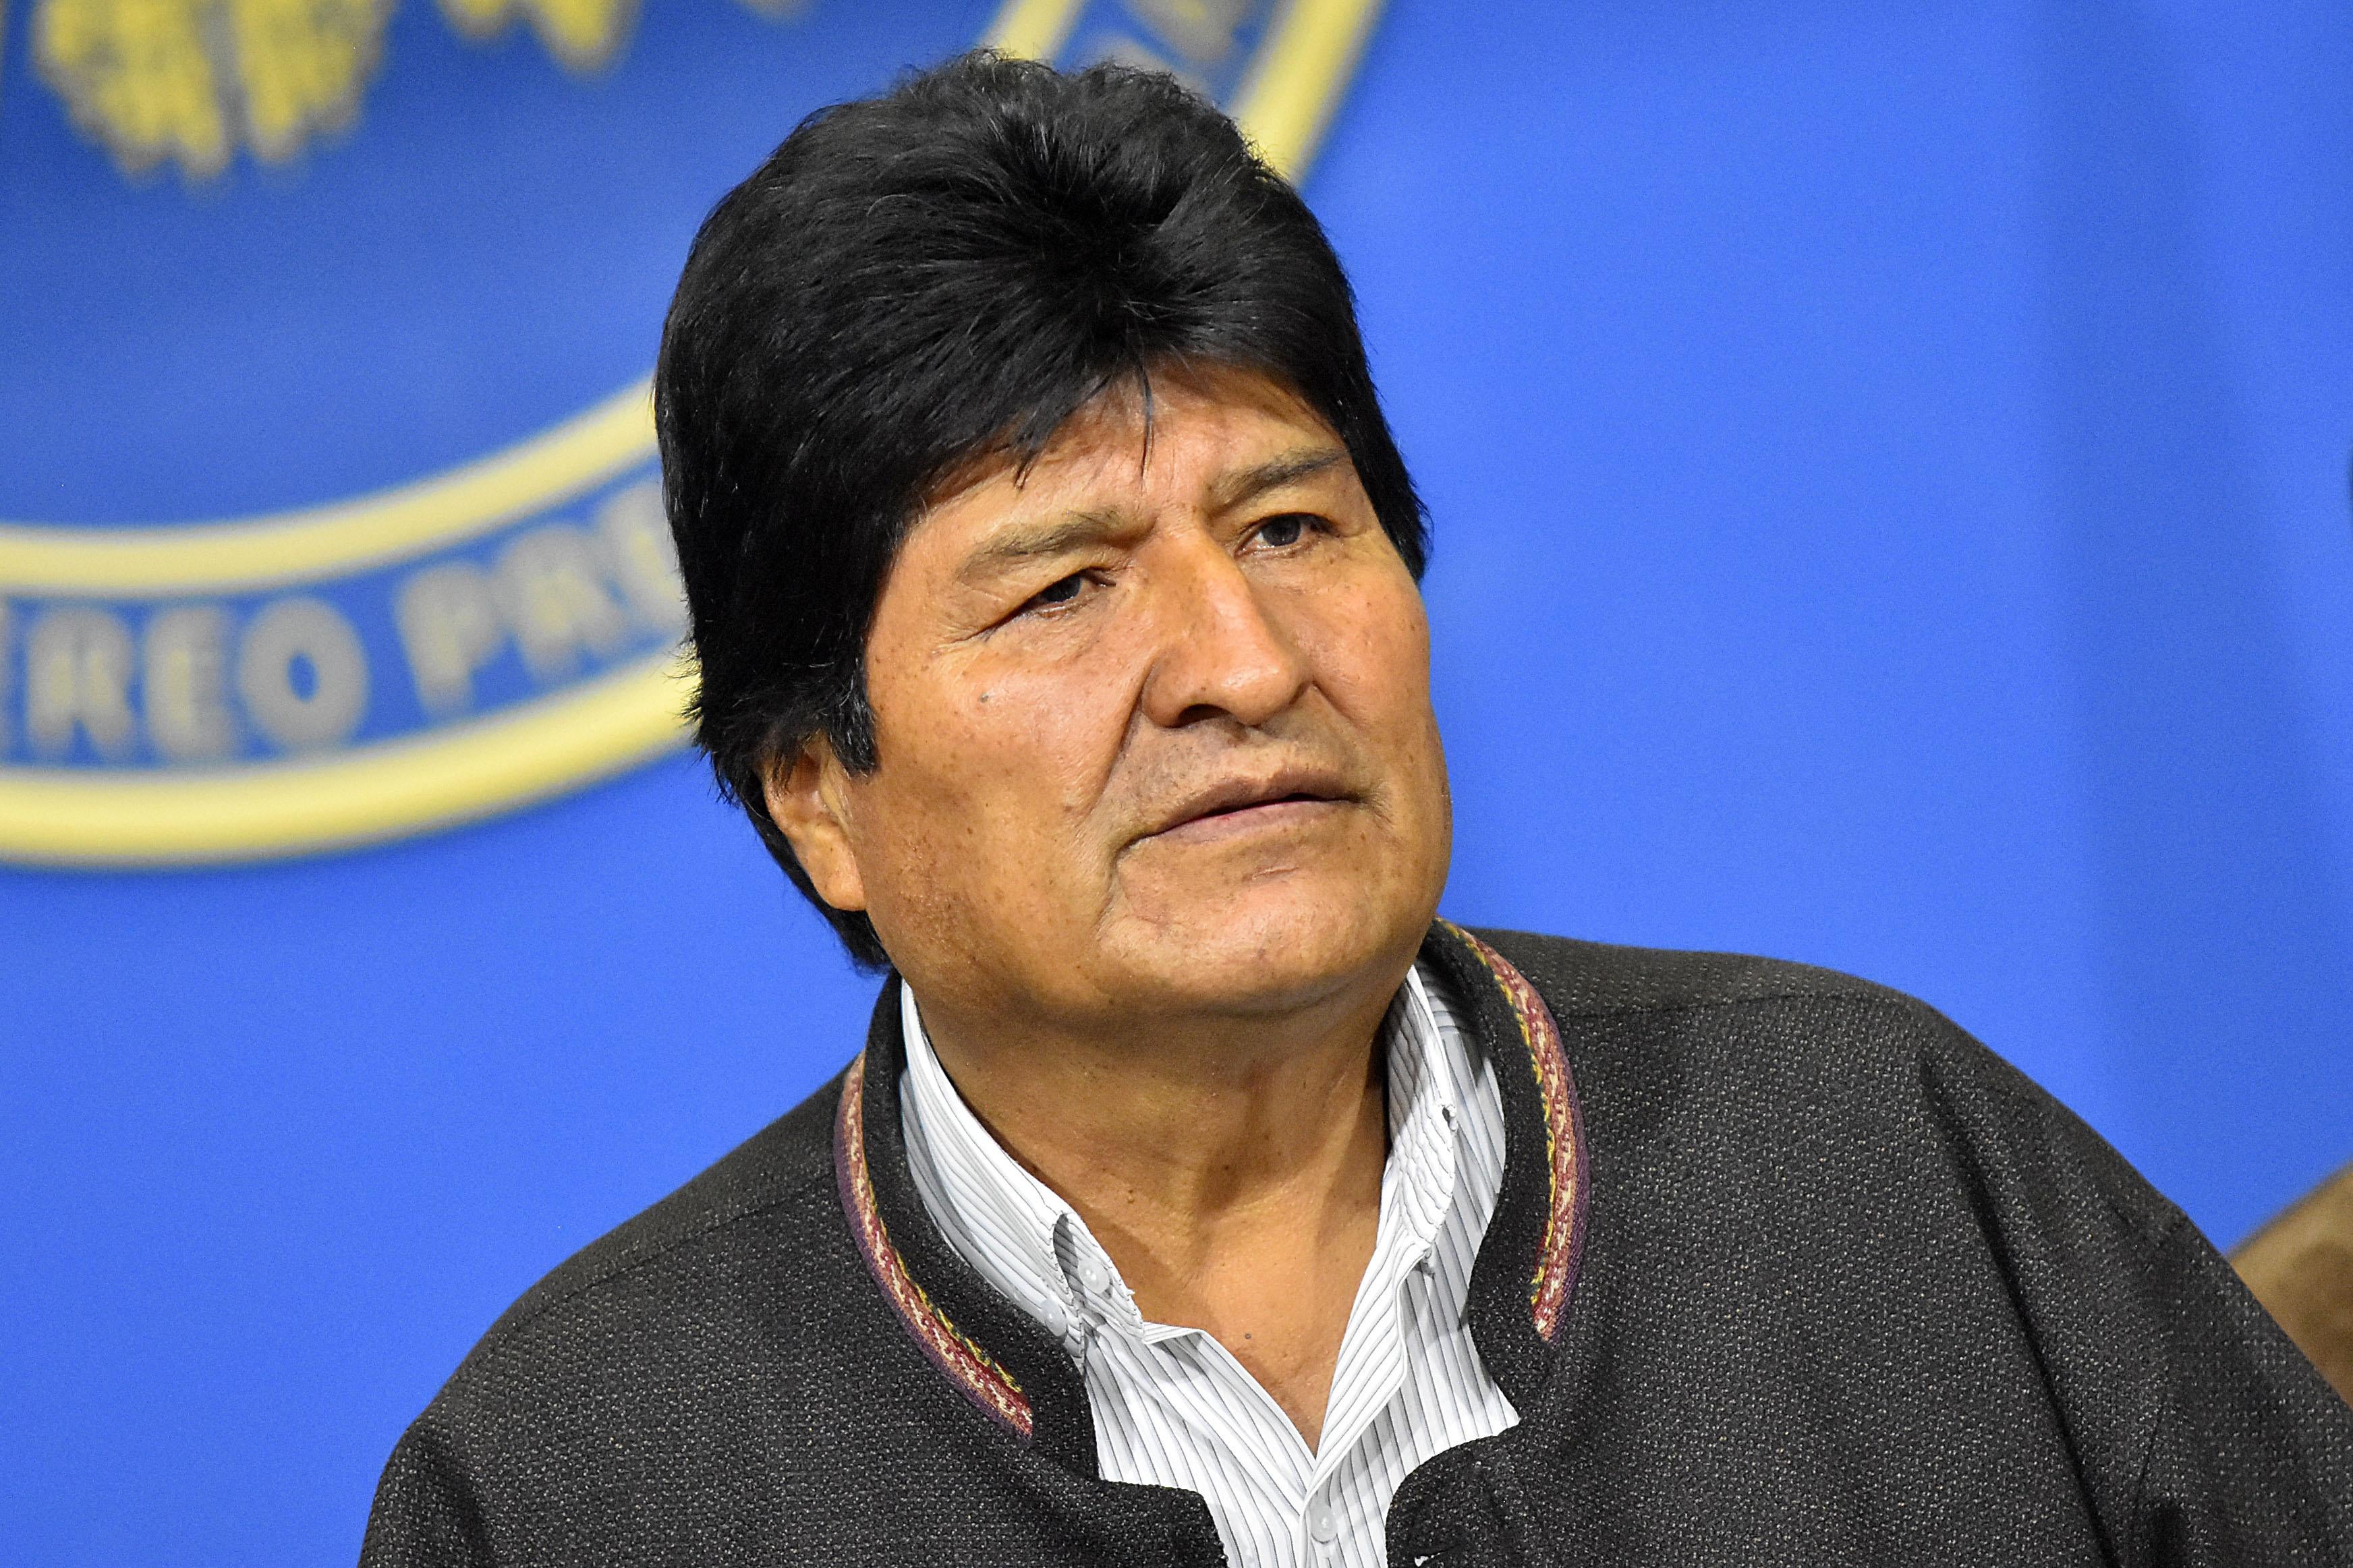 President of Bolivia Evo Morales Ayma talks during a press conference on November 10, 2019 in La Paz, Bolivia.